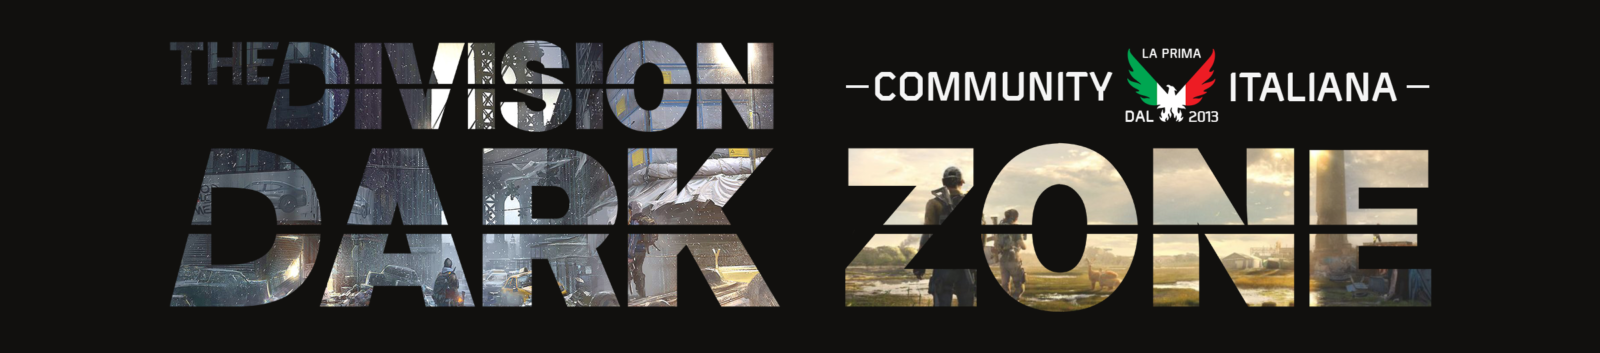 The Division Dark Zone - Community Italiana